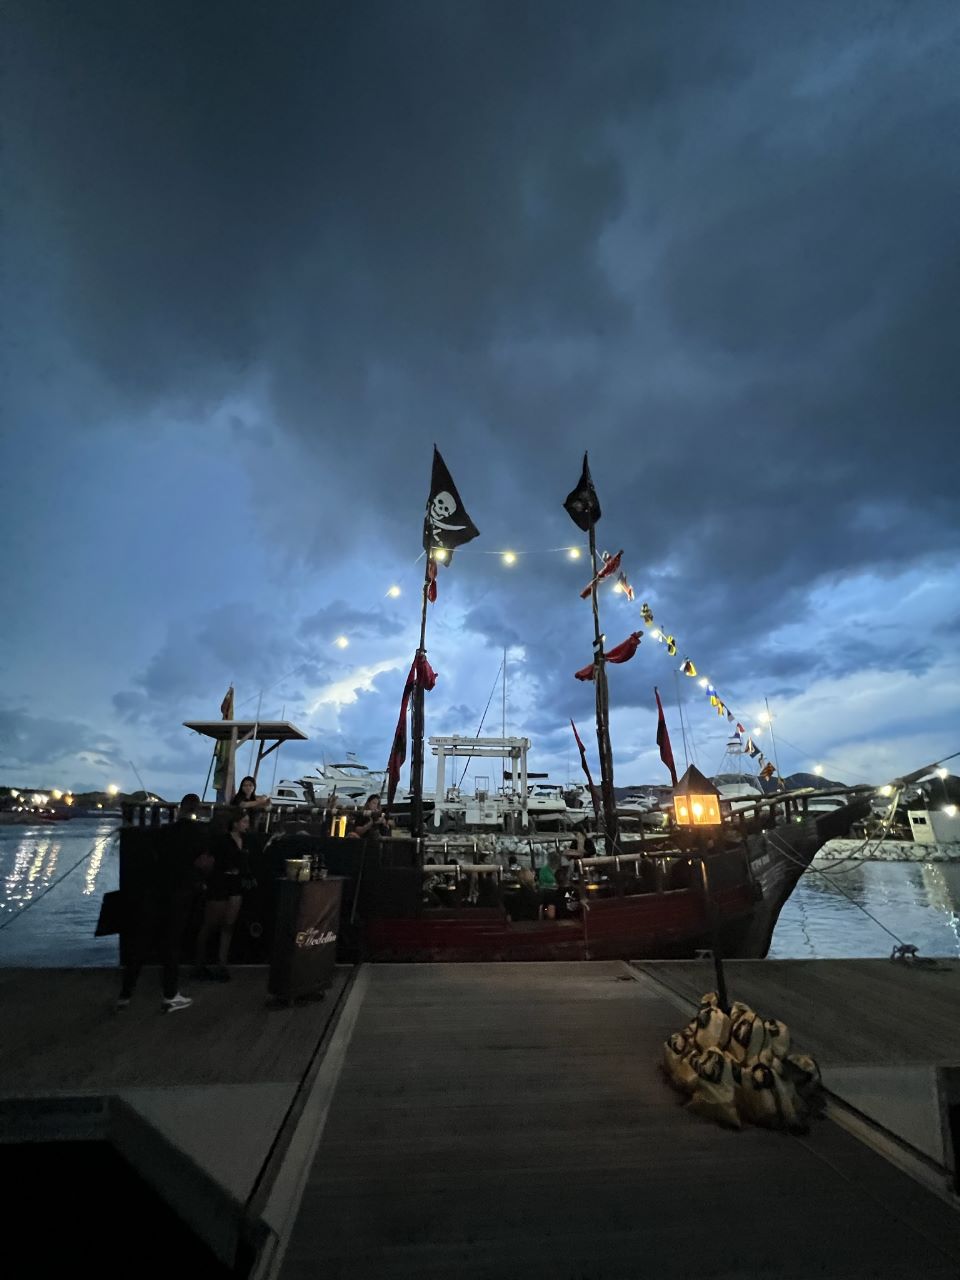 Cata de Ron en Barco Pirata | Visit Santa Marta